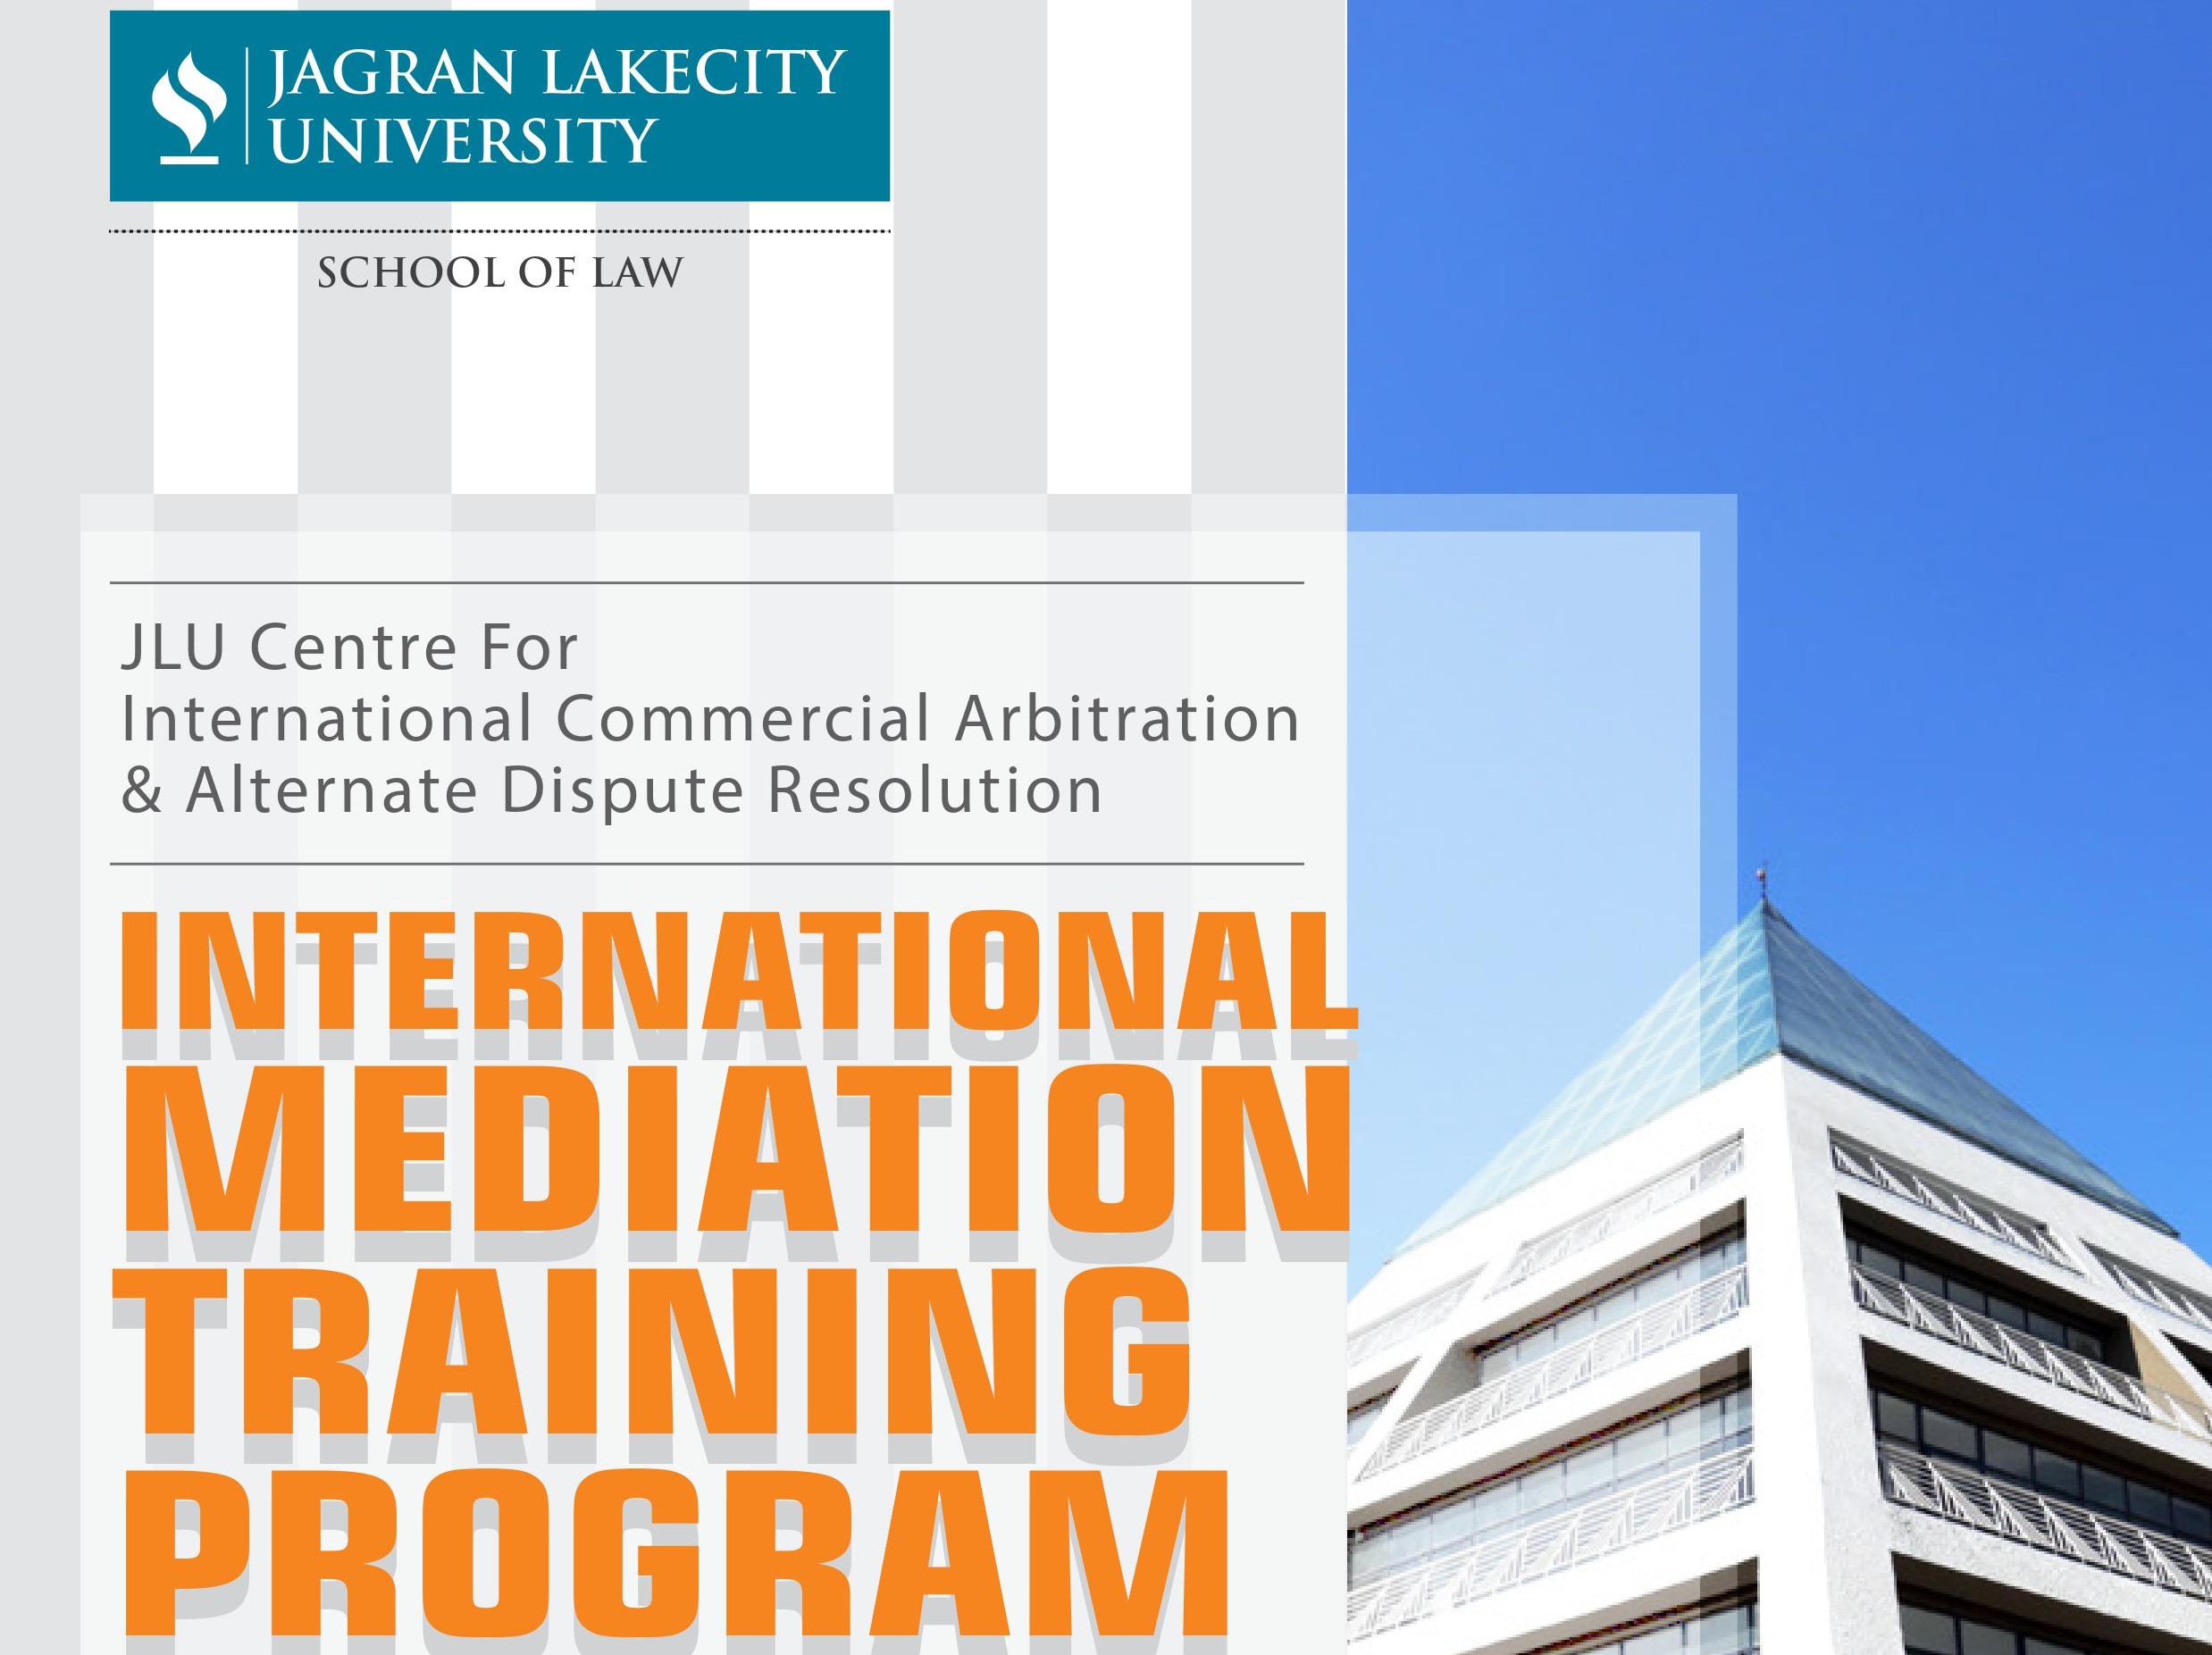 International Mediation Training Program | Jagran Lakecity University